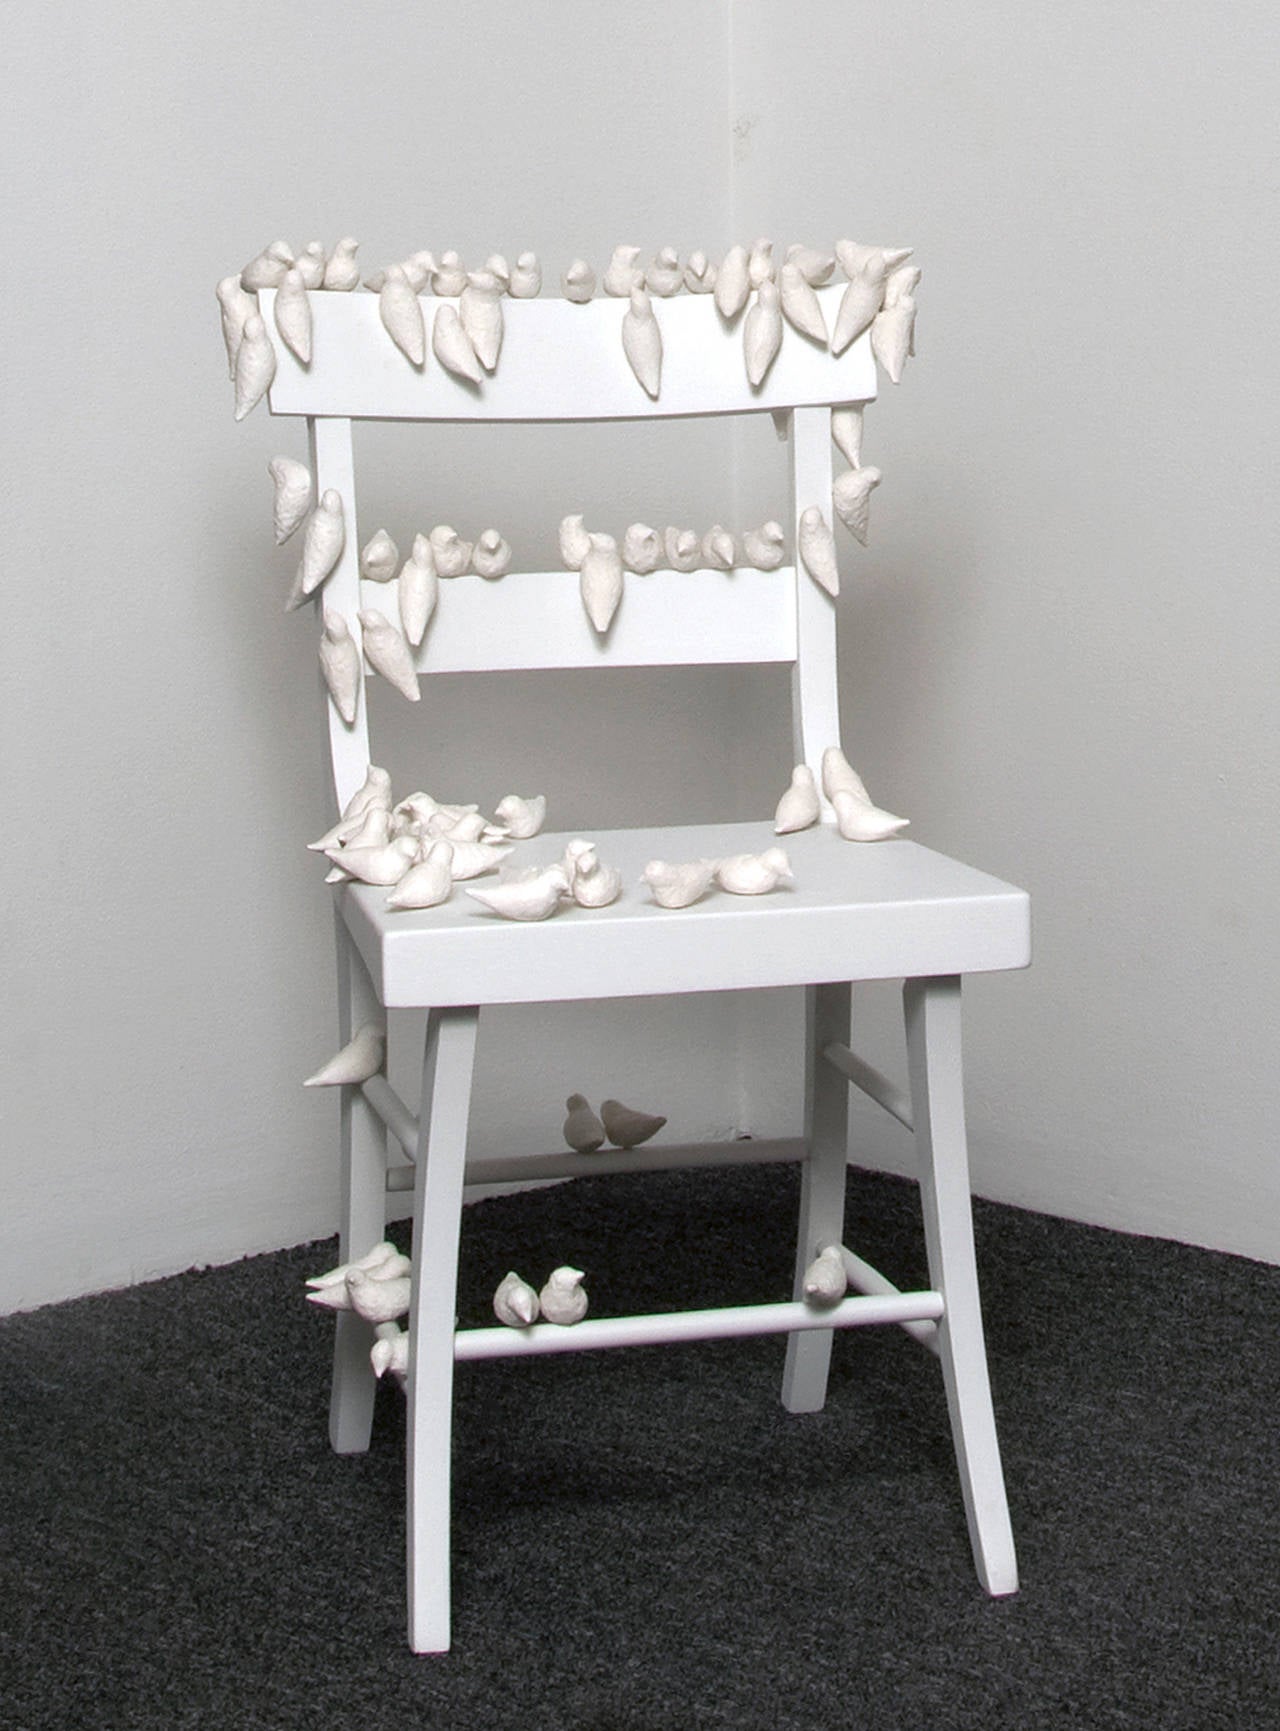 Scatter - Sculpture by Julie Levesque